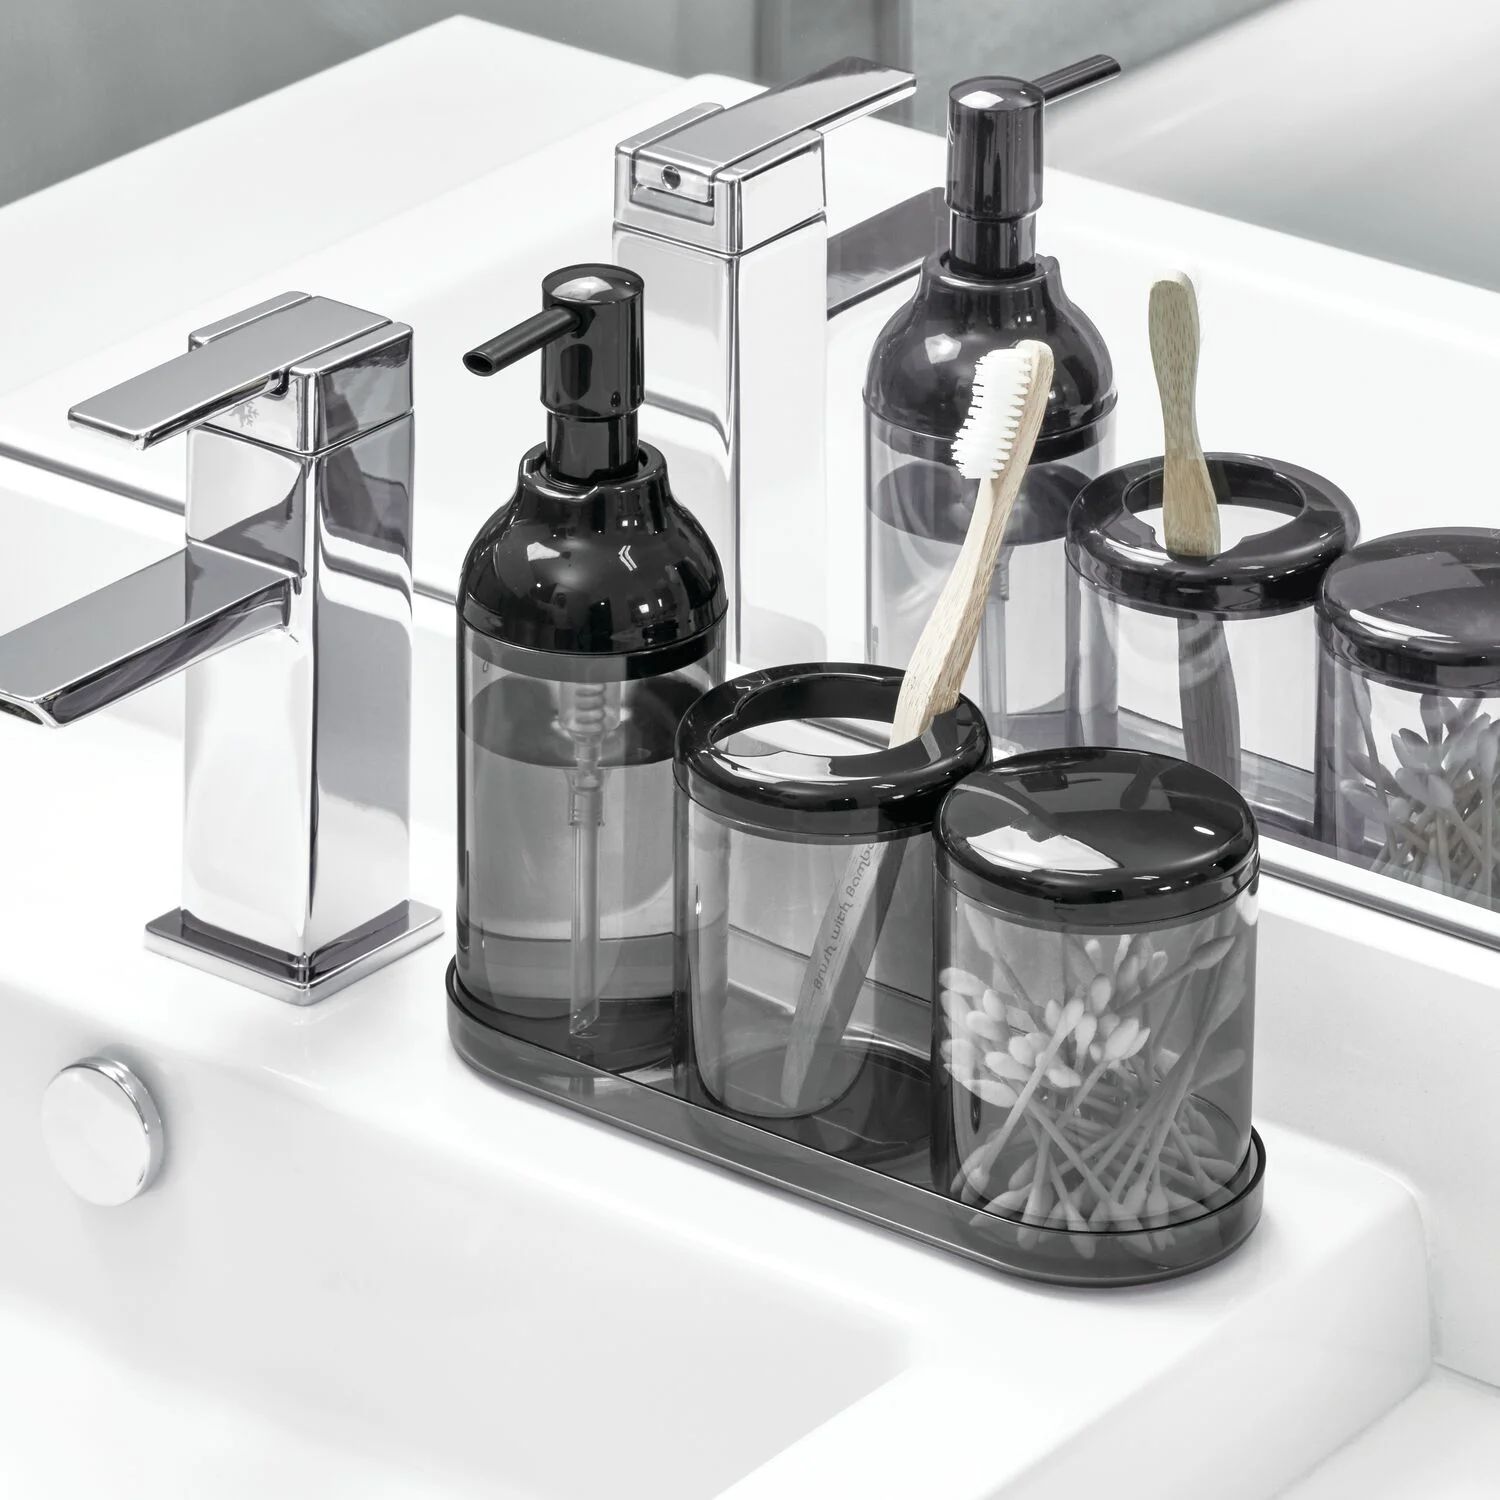 iDesign Finn 4-Piece Bathroom Accessory Set, Black and Smoke | Walmart (US)